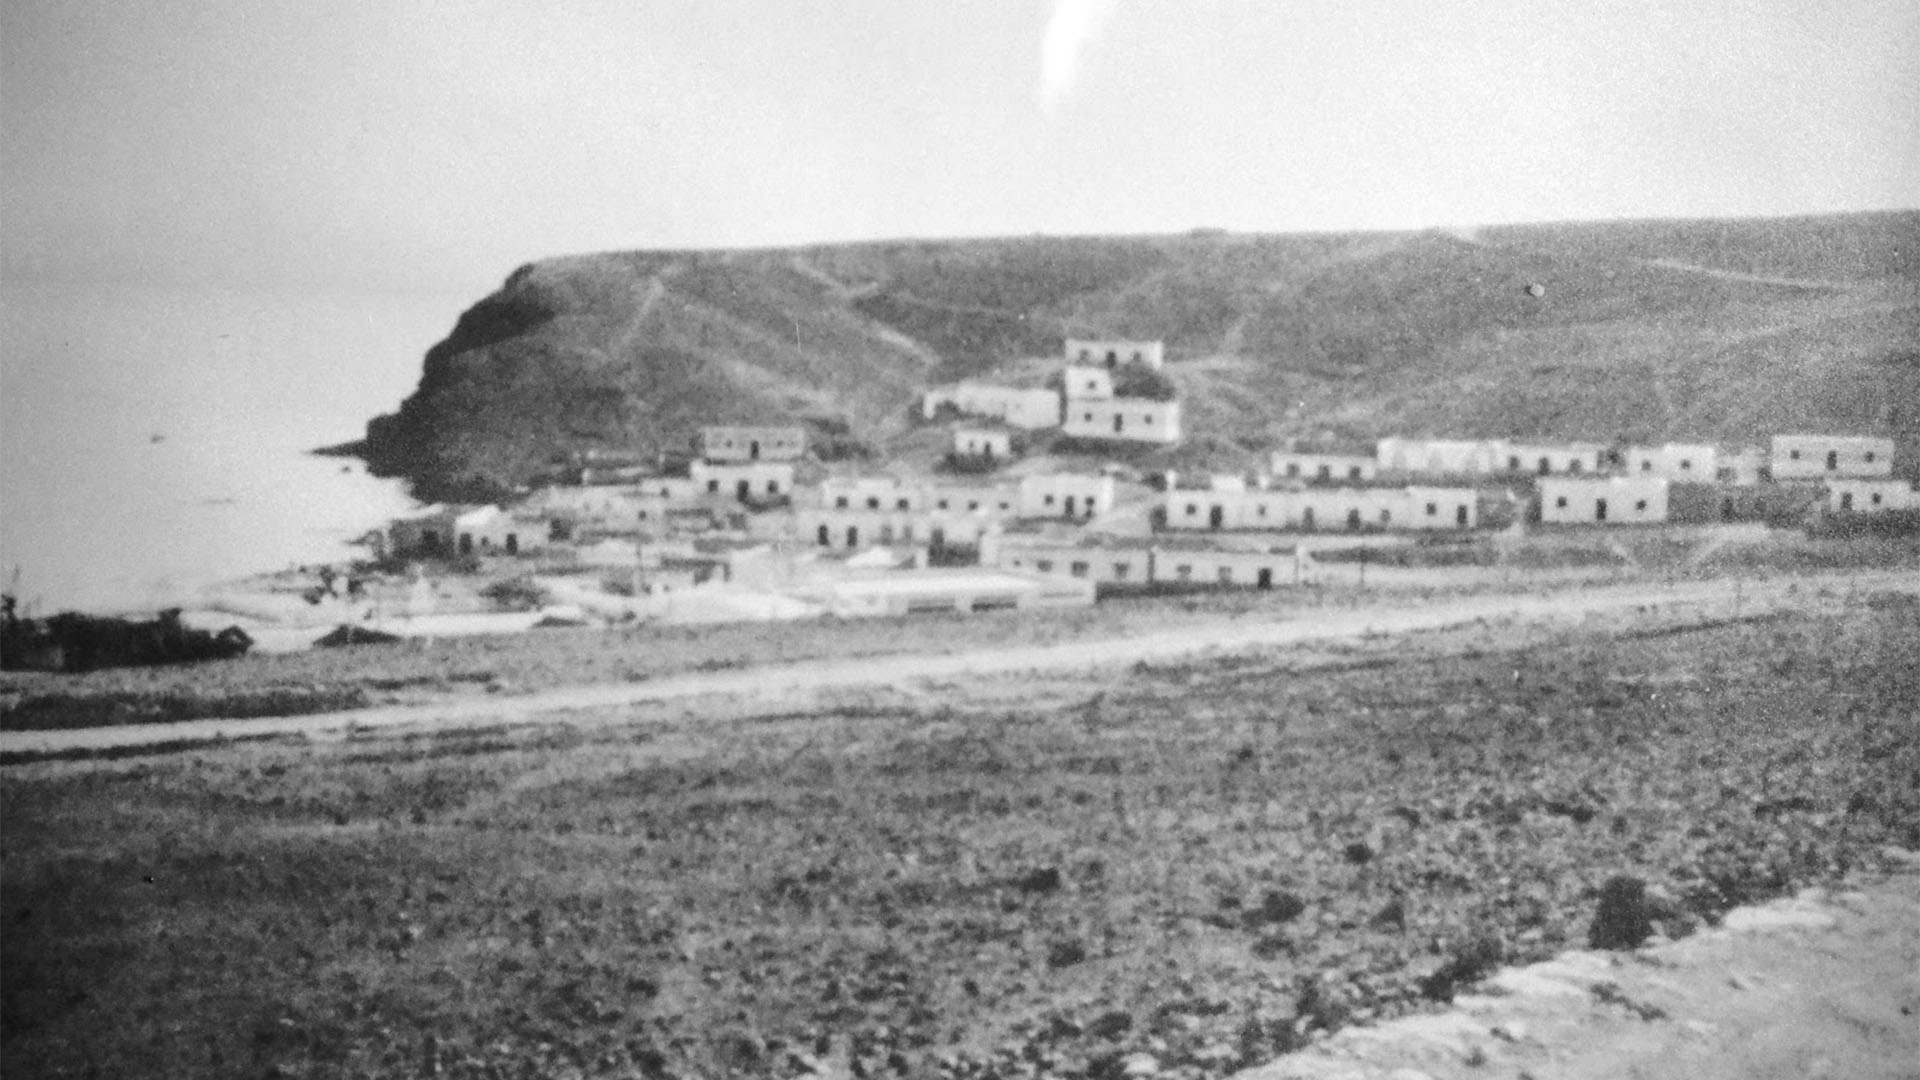 Der Ort Morro Jable Fuerteventura: Morro Jable ca. in den 1950igern.